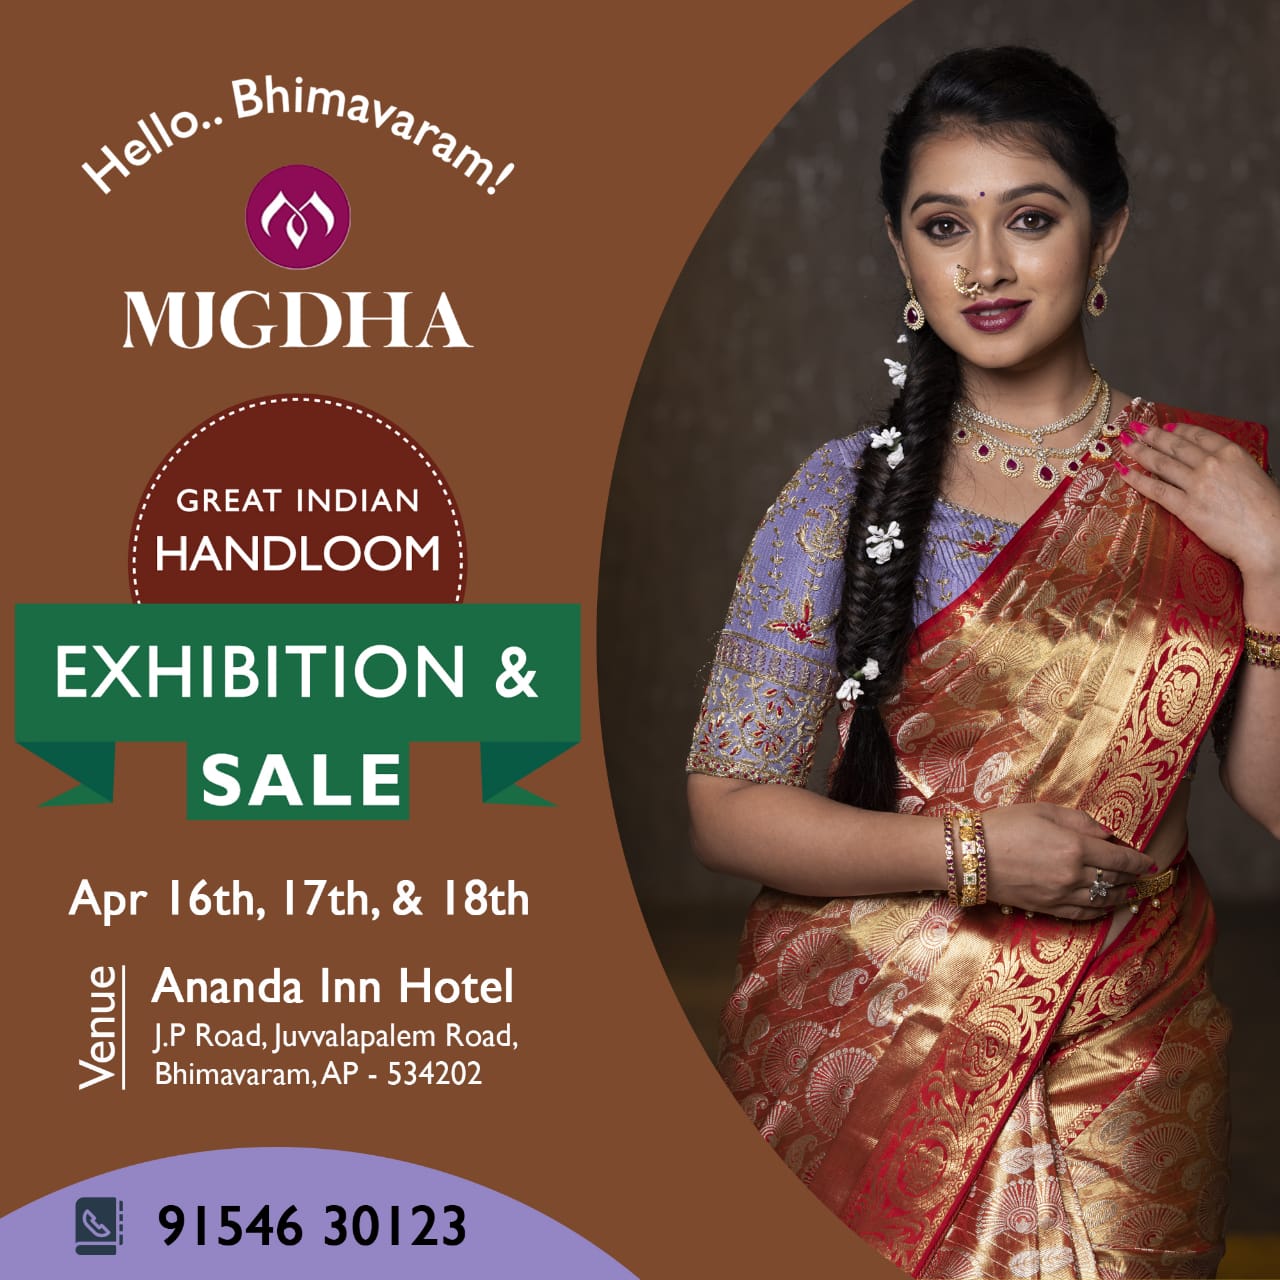 The Great Indian Handloom Exhibition & Sale From Mugdha is back at Bhimavaram, West Godavari, Andhra Pradesh, India